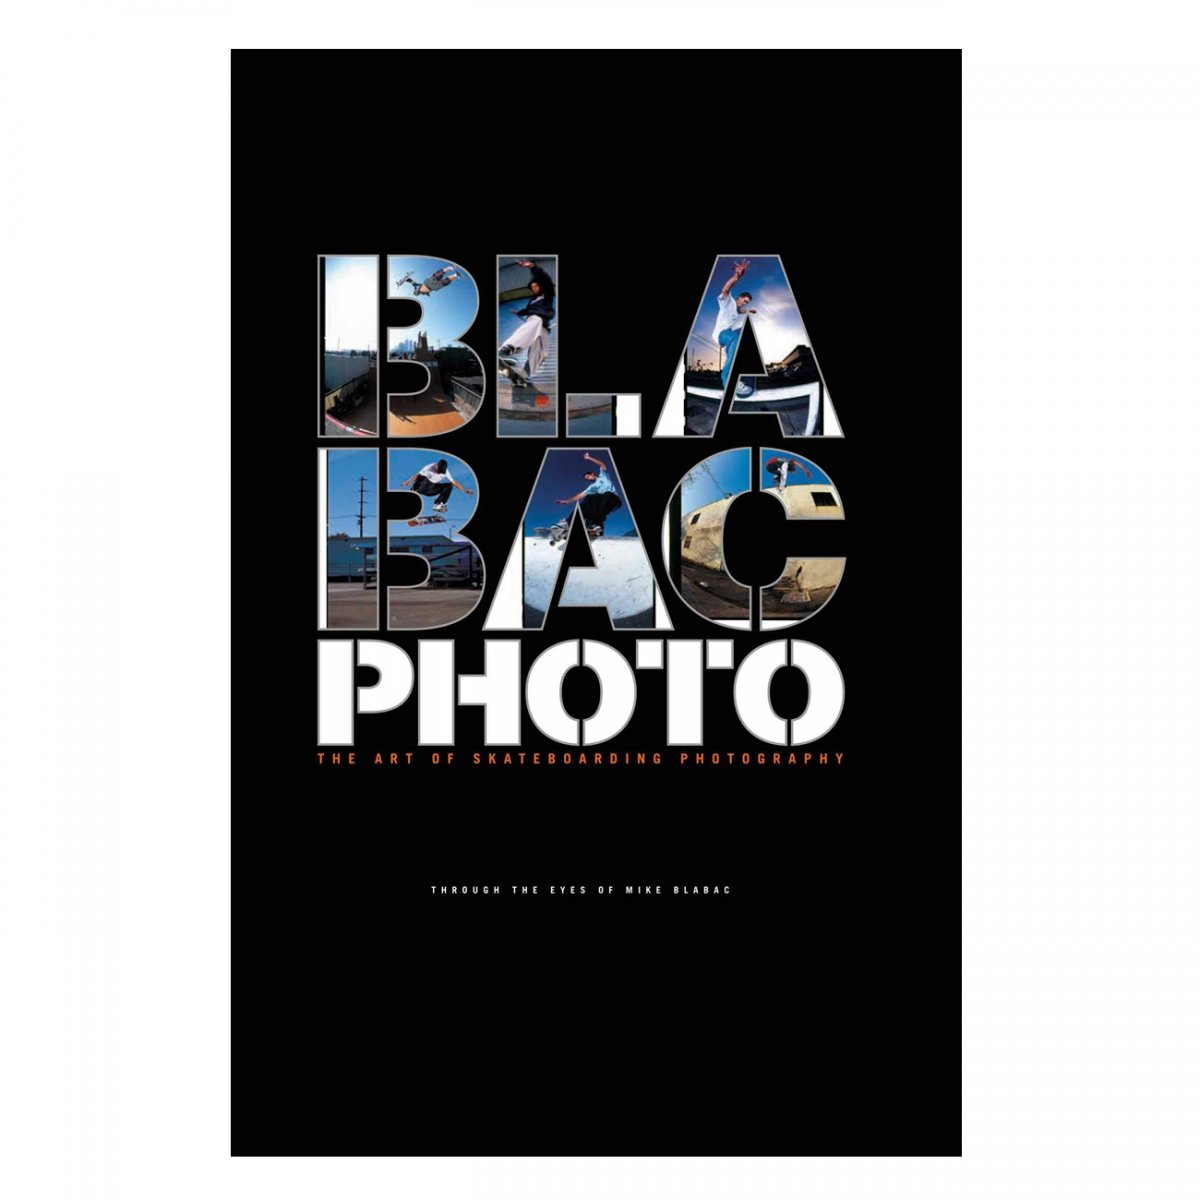 Blabac (ブラバック)マイクブラバック写真集 |BLABAC PHOTO / By Mike